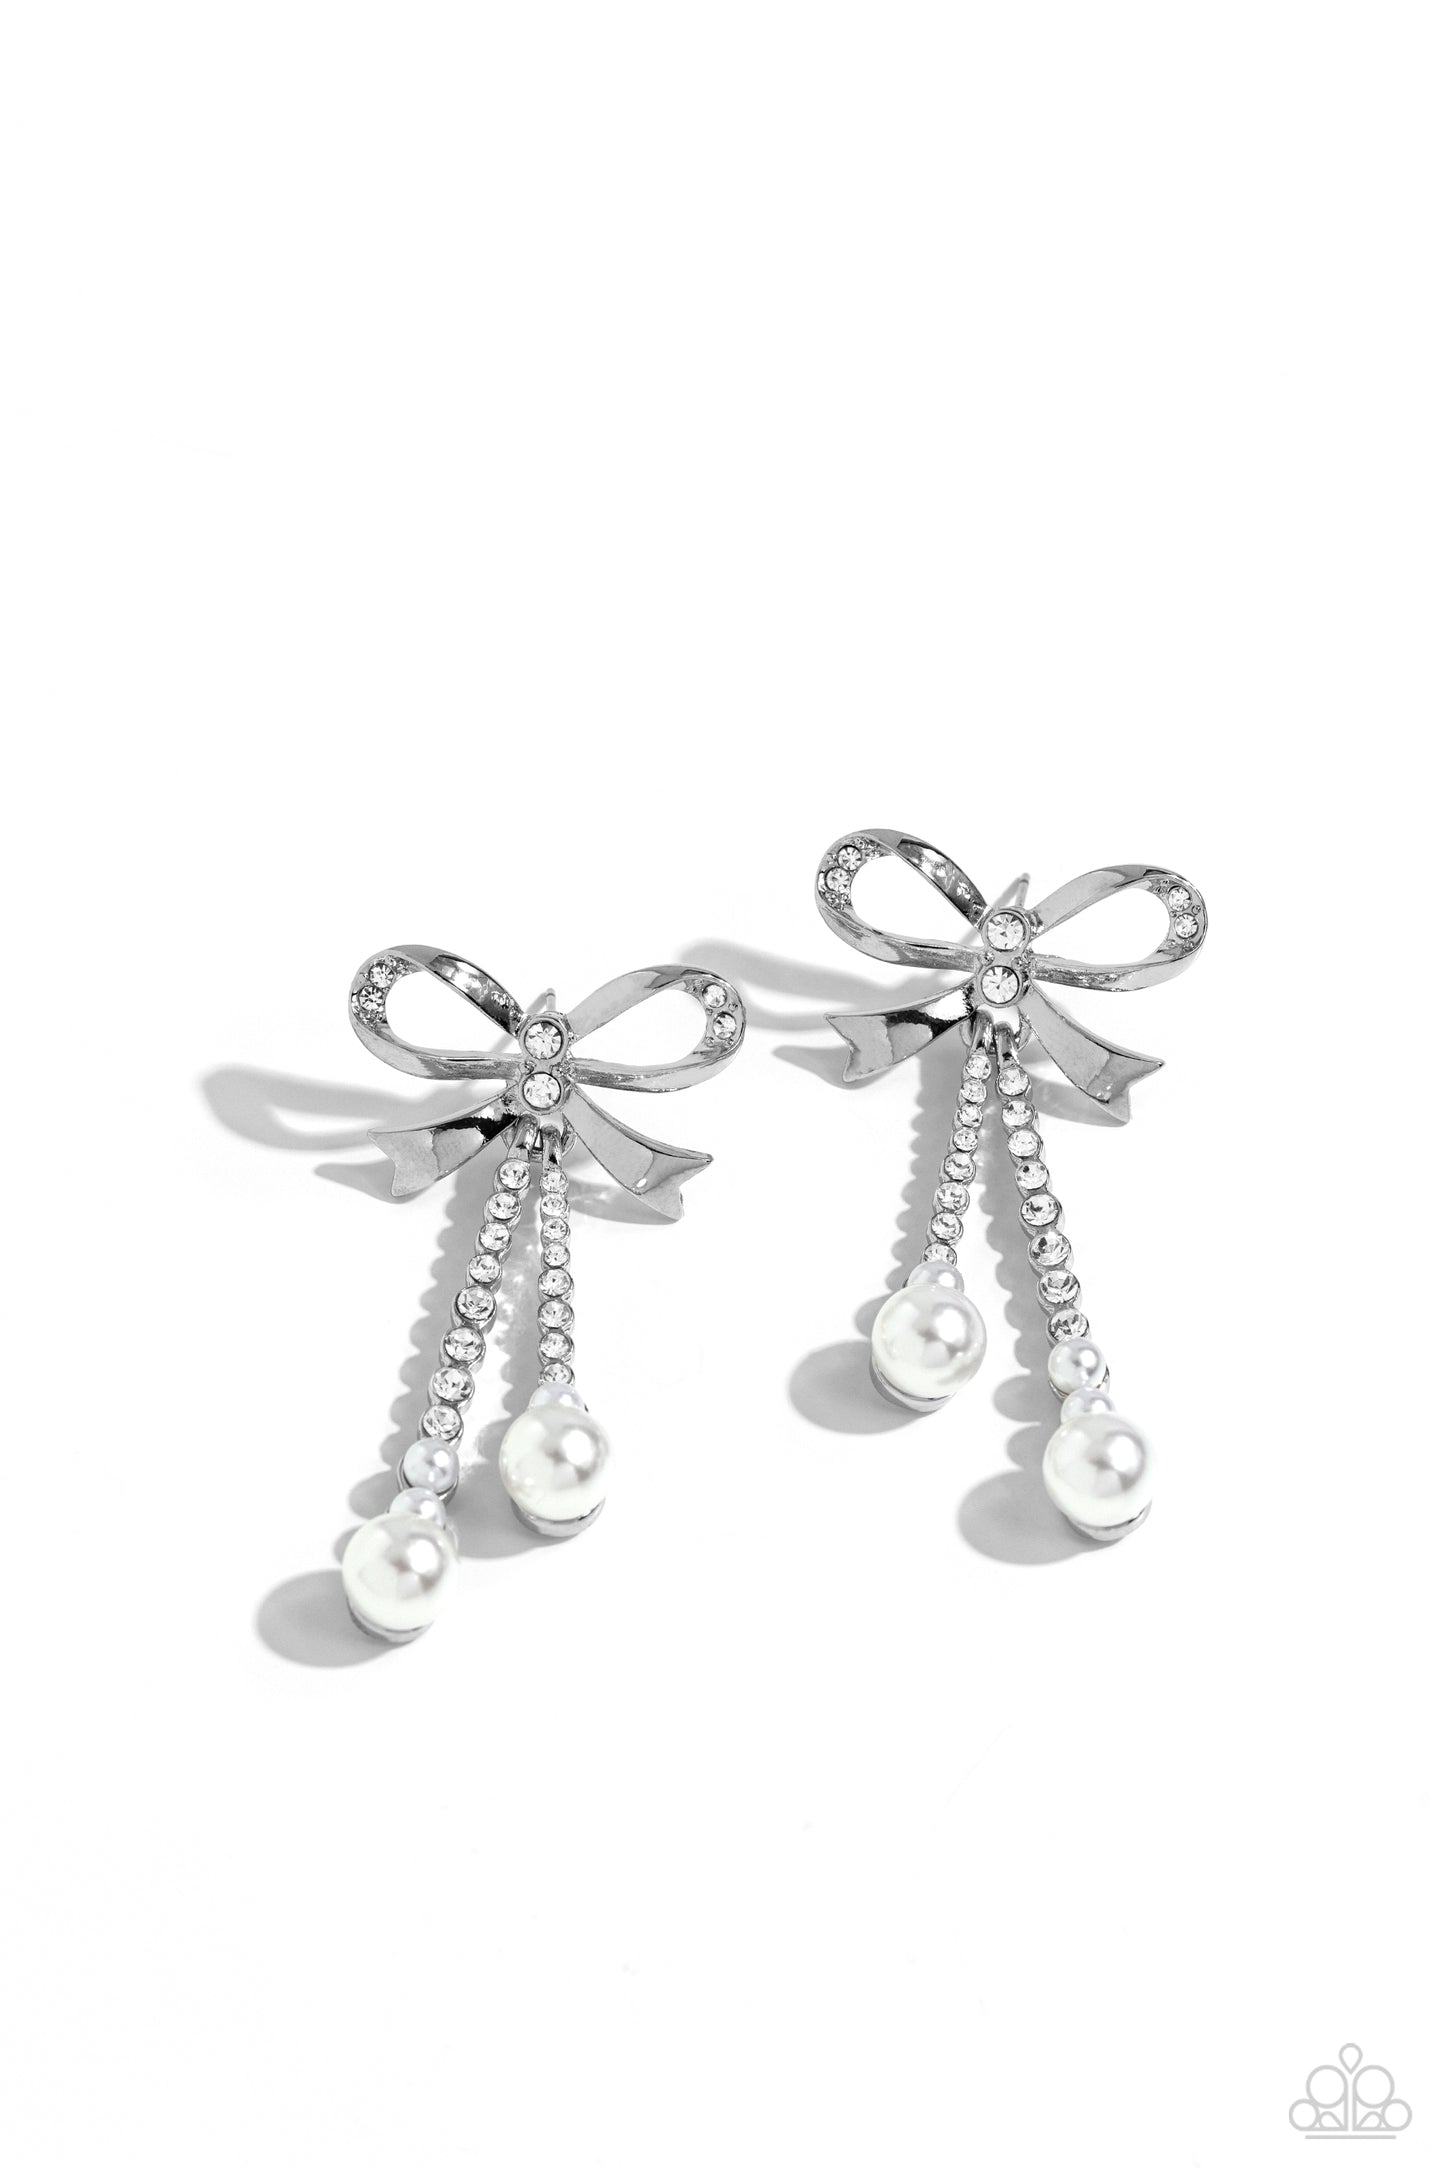 Bodacious Bow - white - Paparazzi earrings